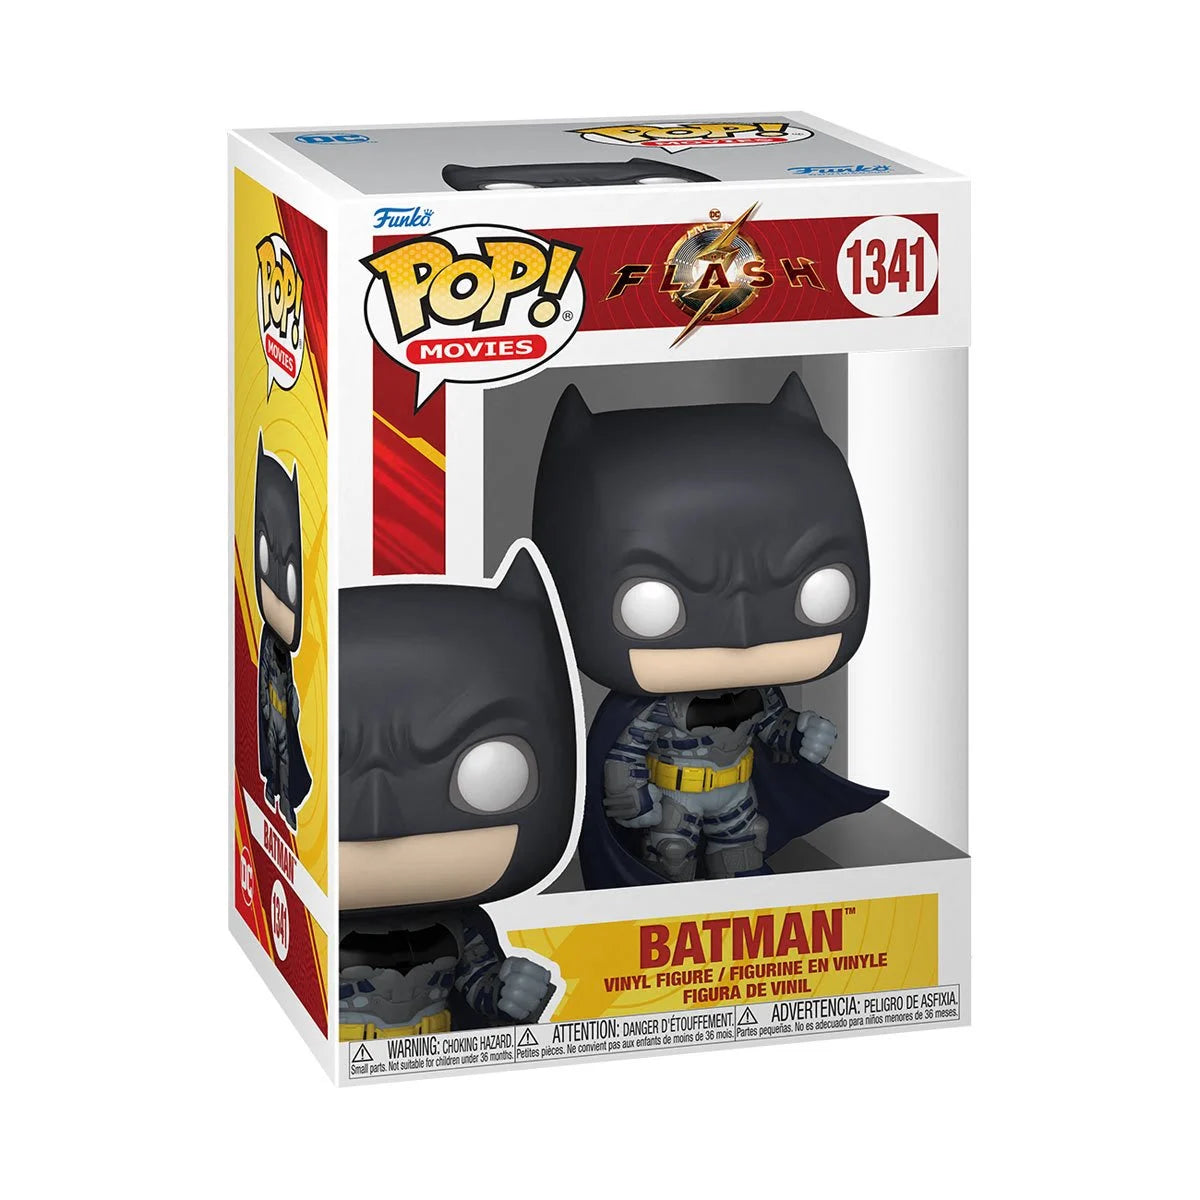 The Flash Movie Funko Pop Batman in a box - Heretoserveyou